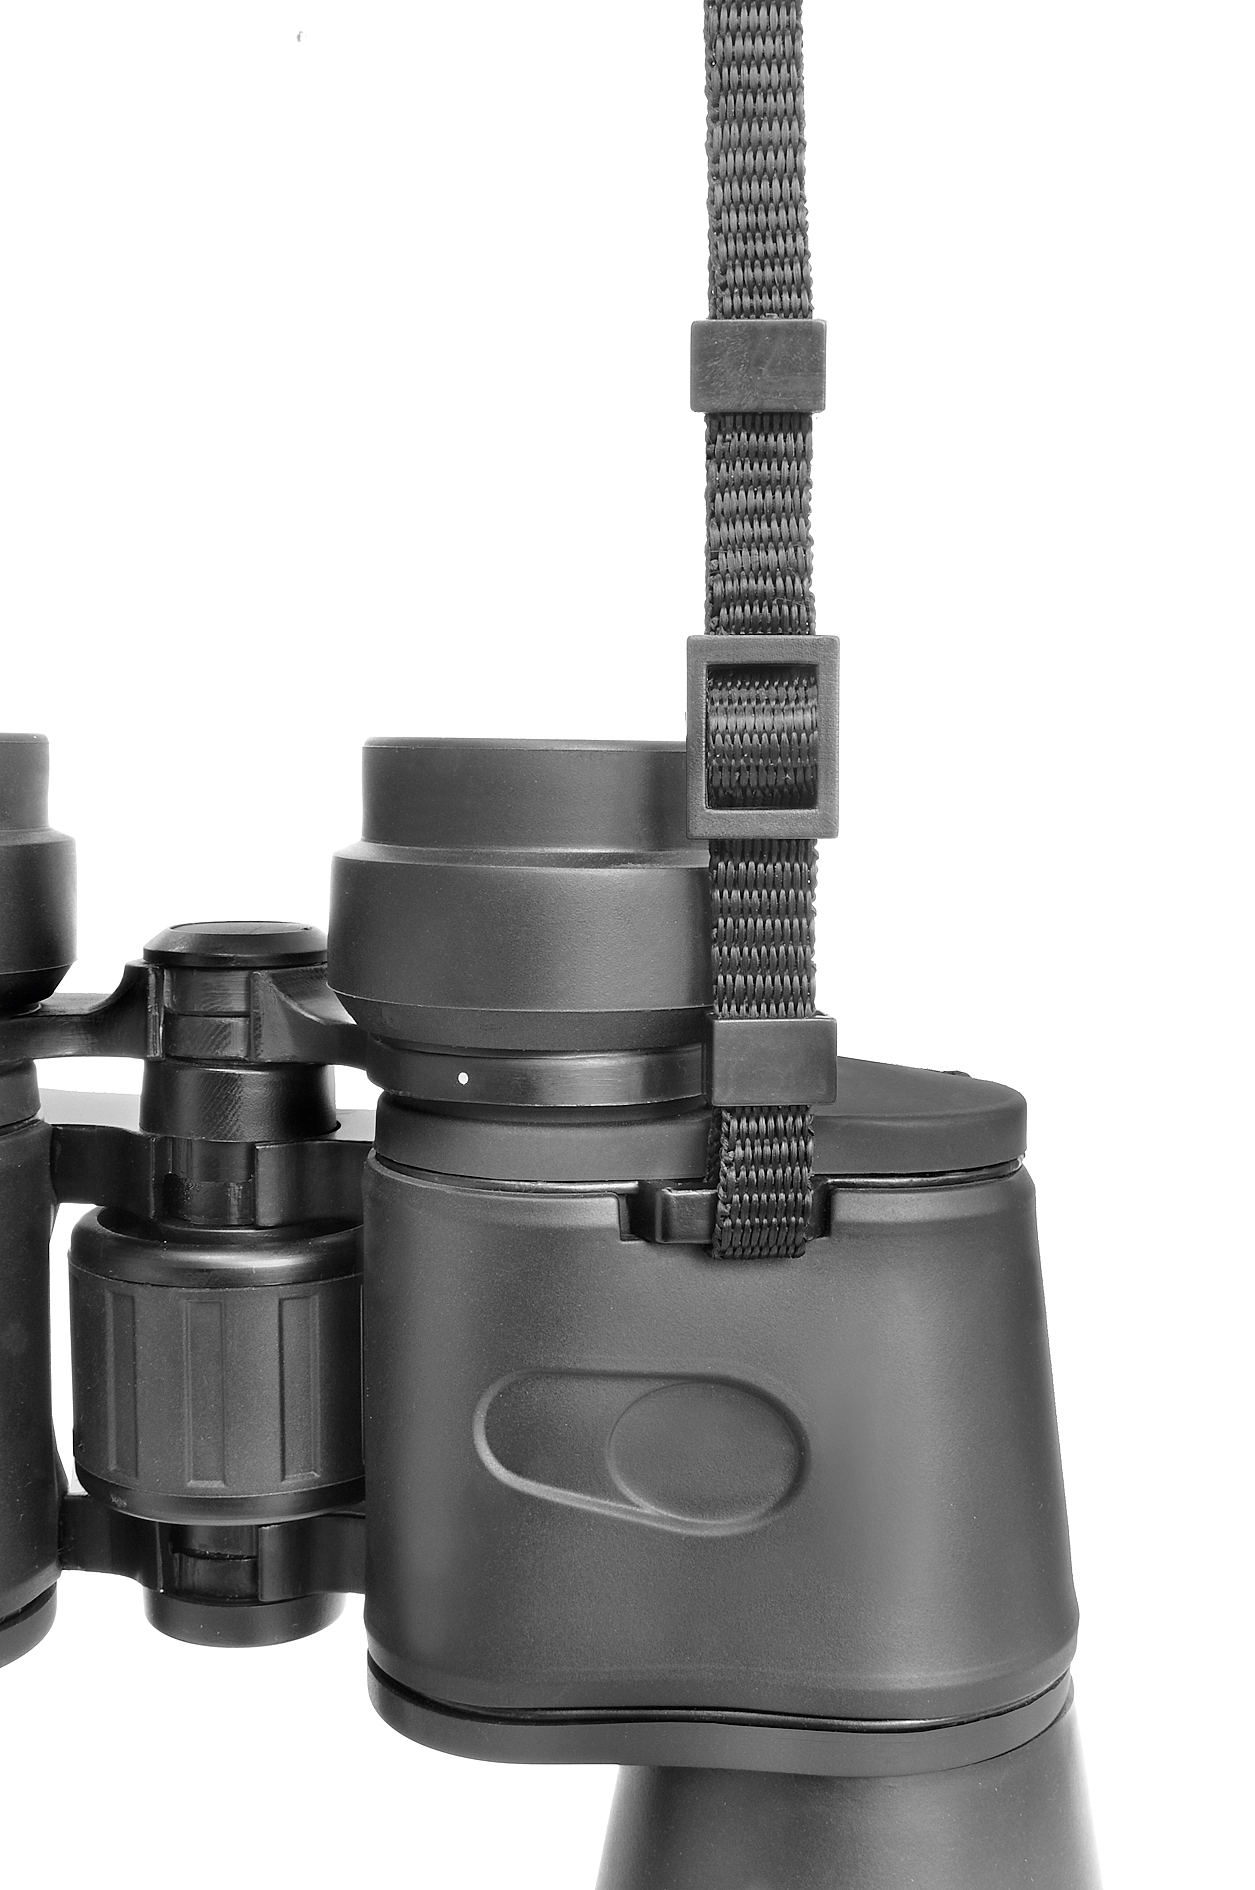 BRESSER Hunter 8-24x50 Zoom Binoculars